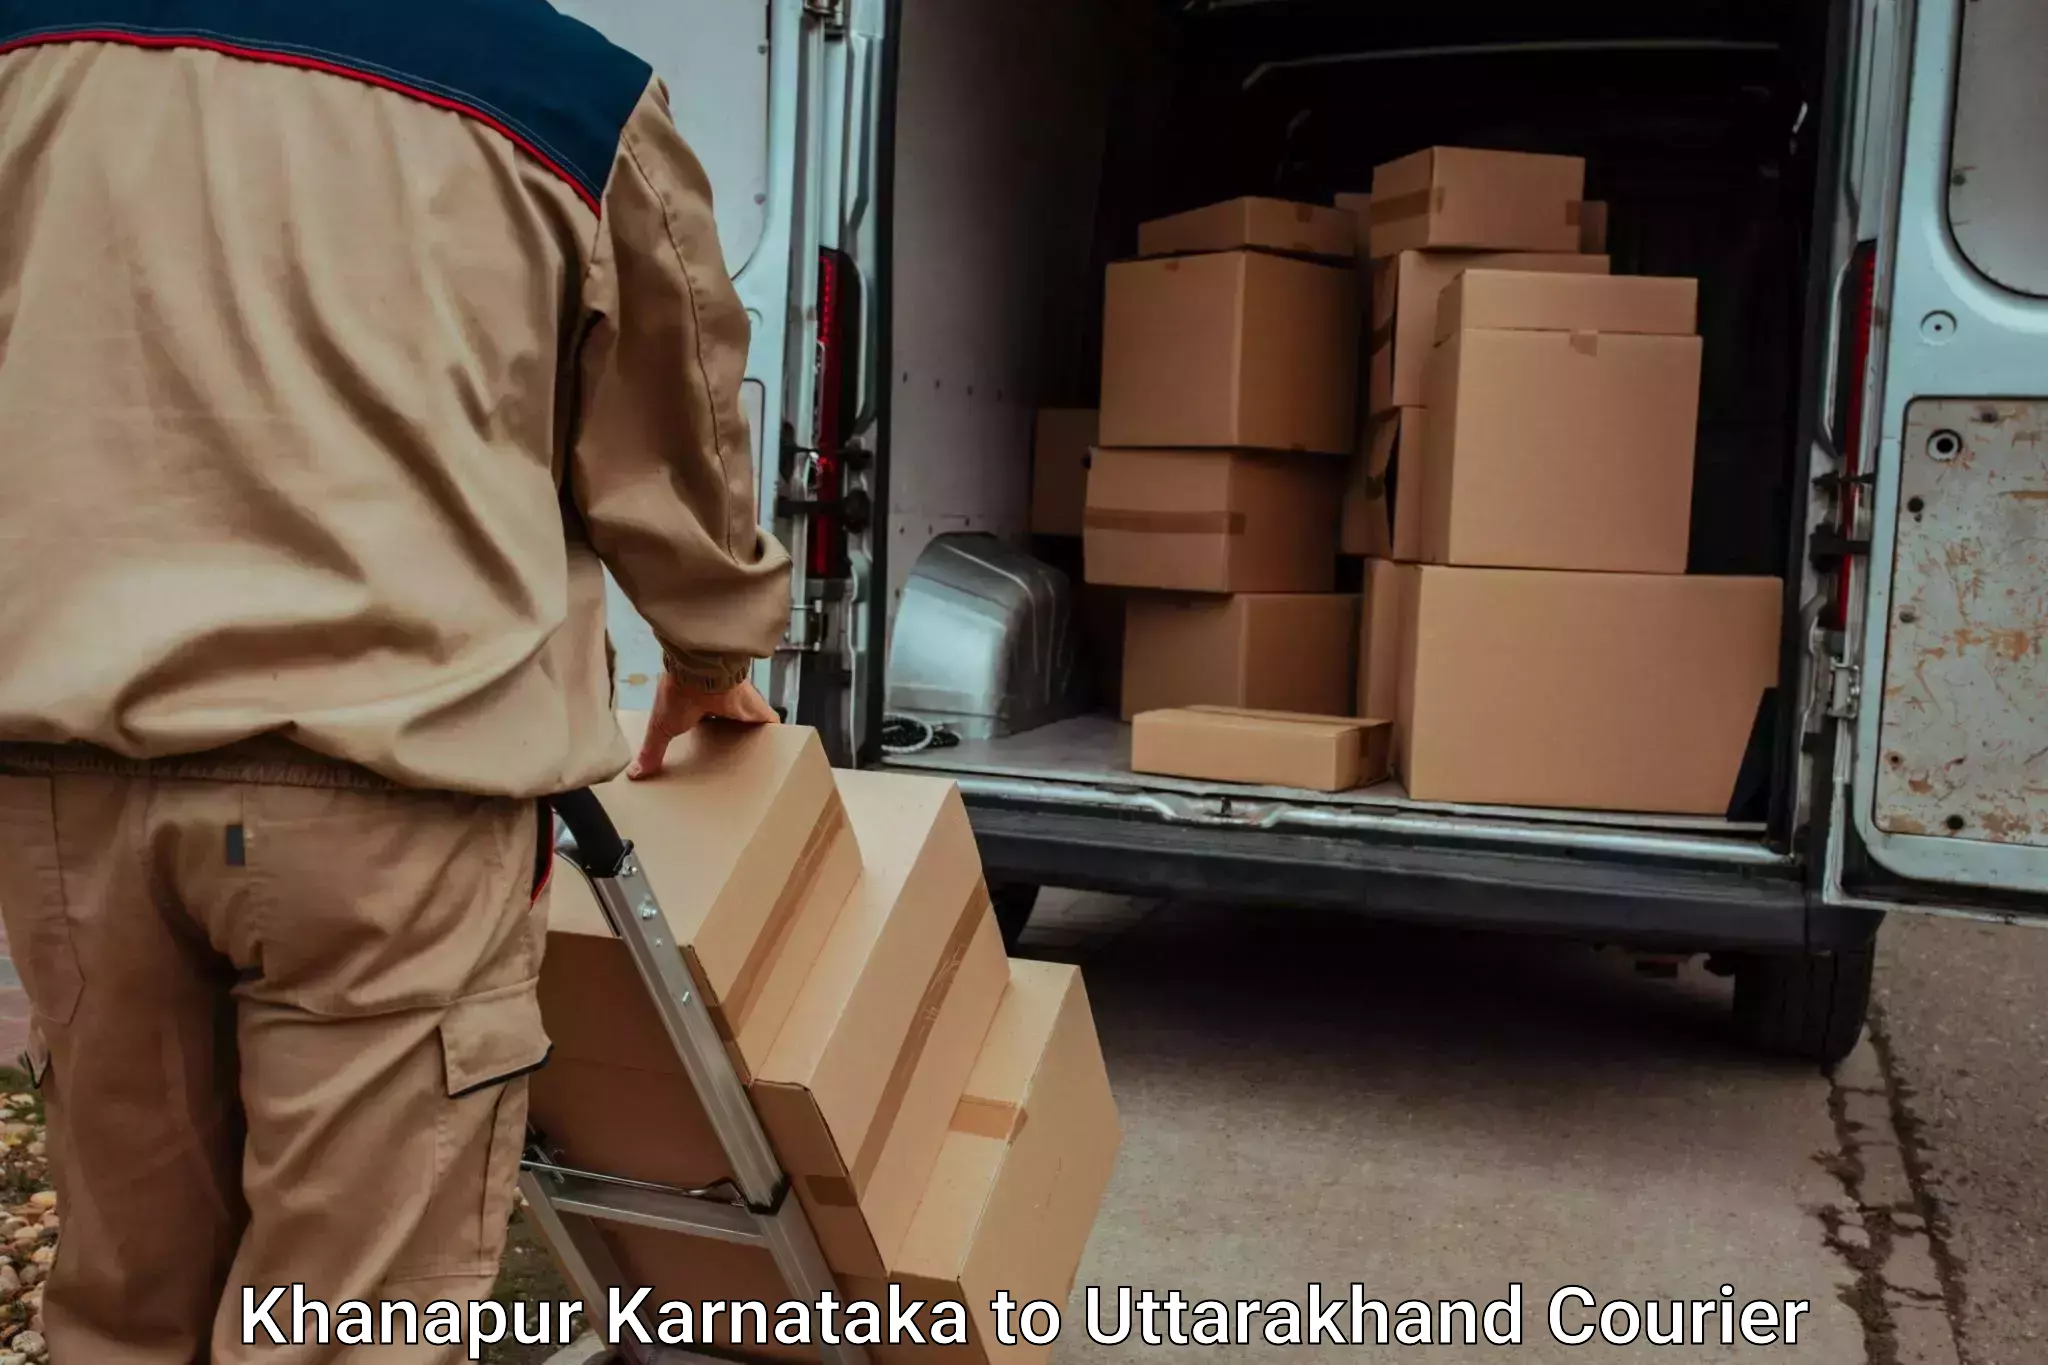 Baggage shipping experience Khanapur Karnataka to Rudraprayag